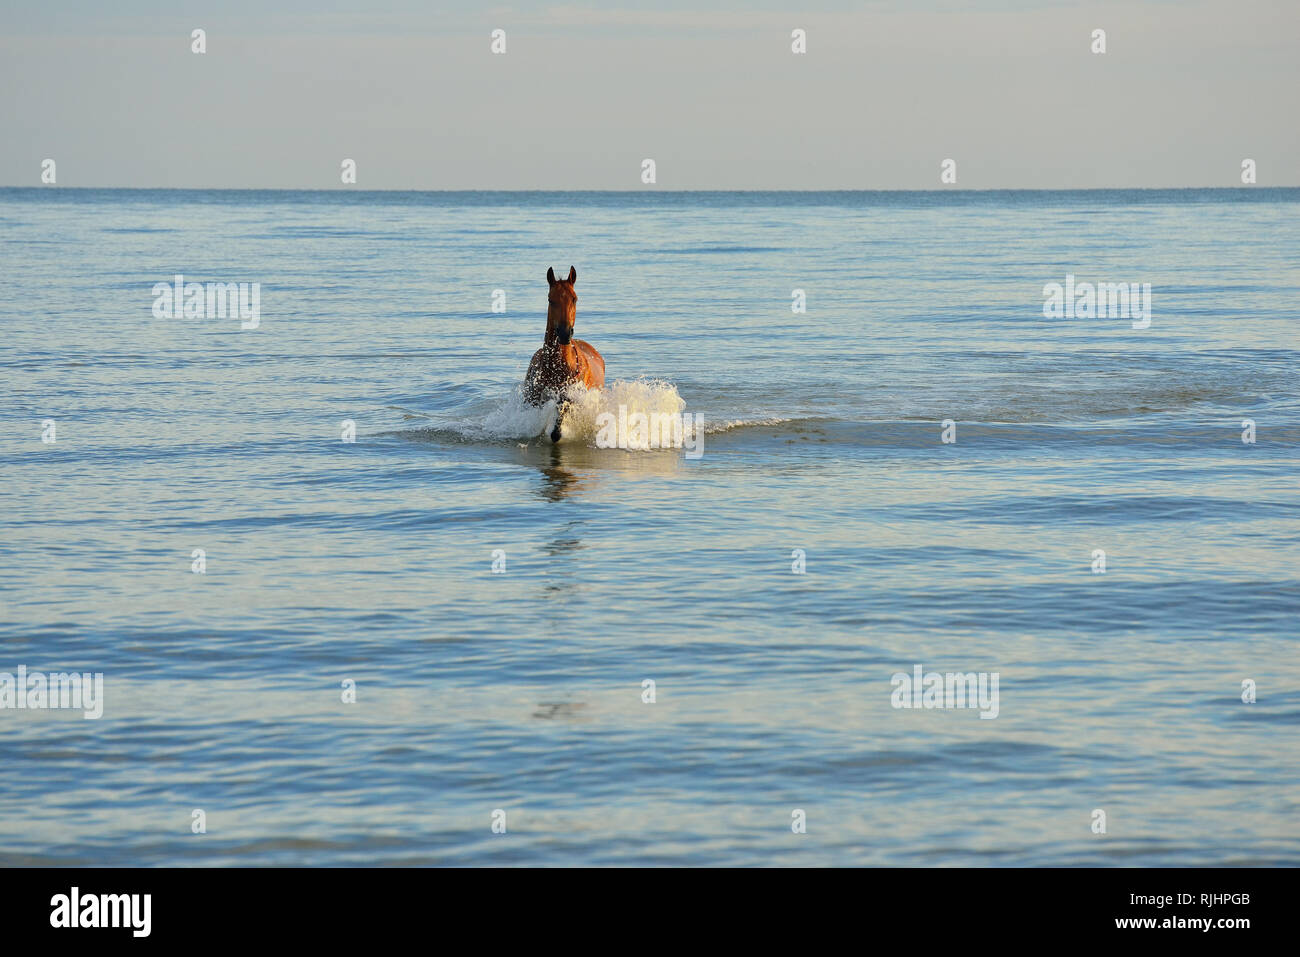 Bay horse runs towards the camera from afar in the blue sea. Horizontal, centred. Stock Photo